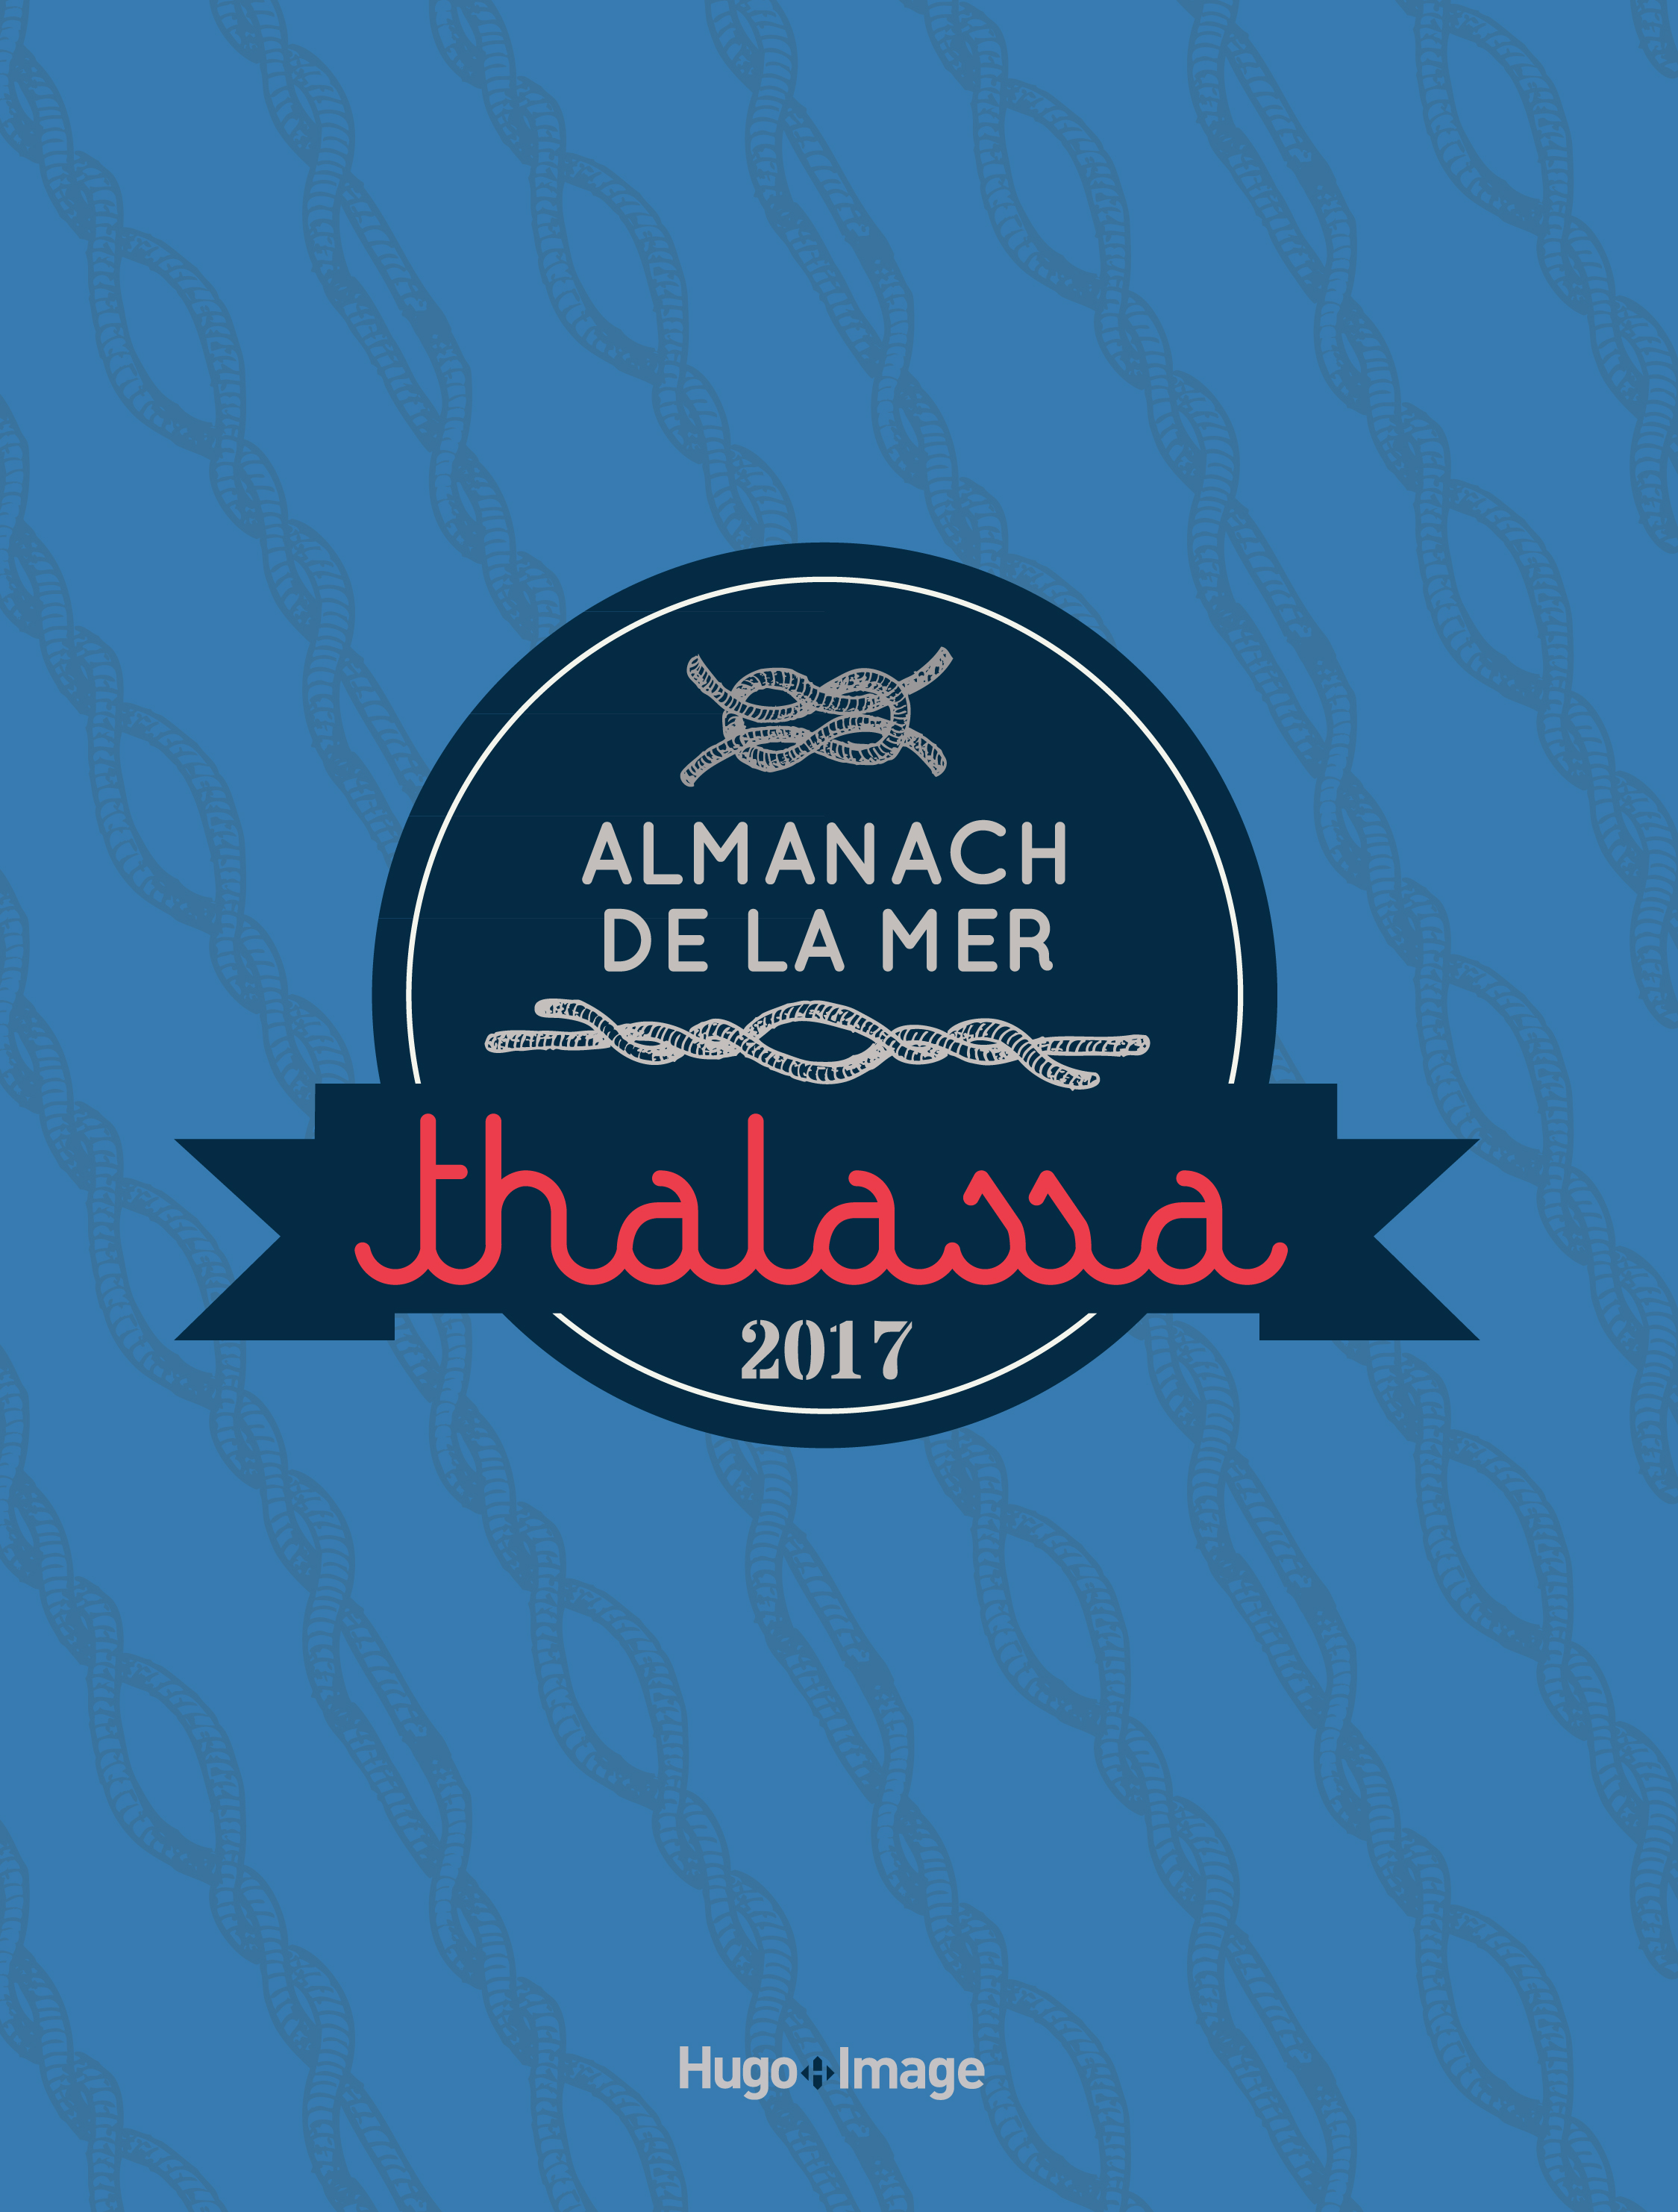 Almanach Thalassa